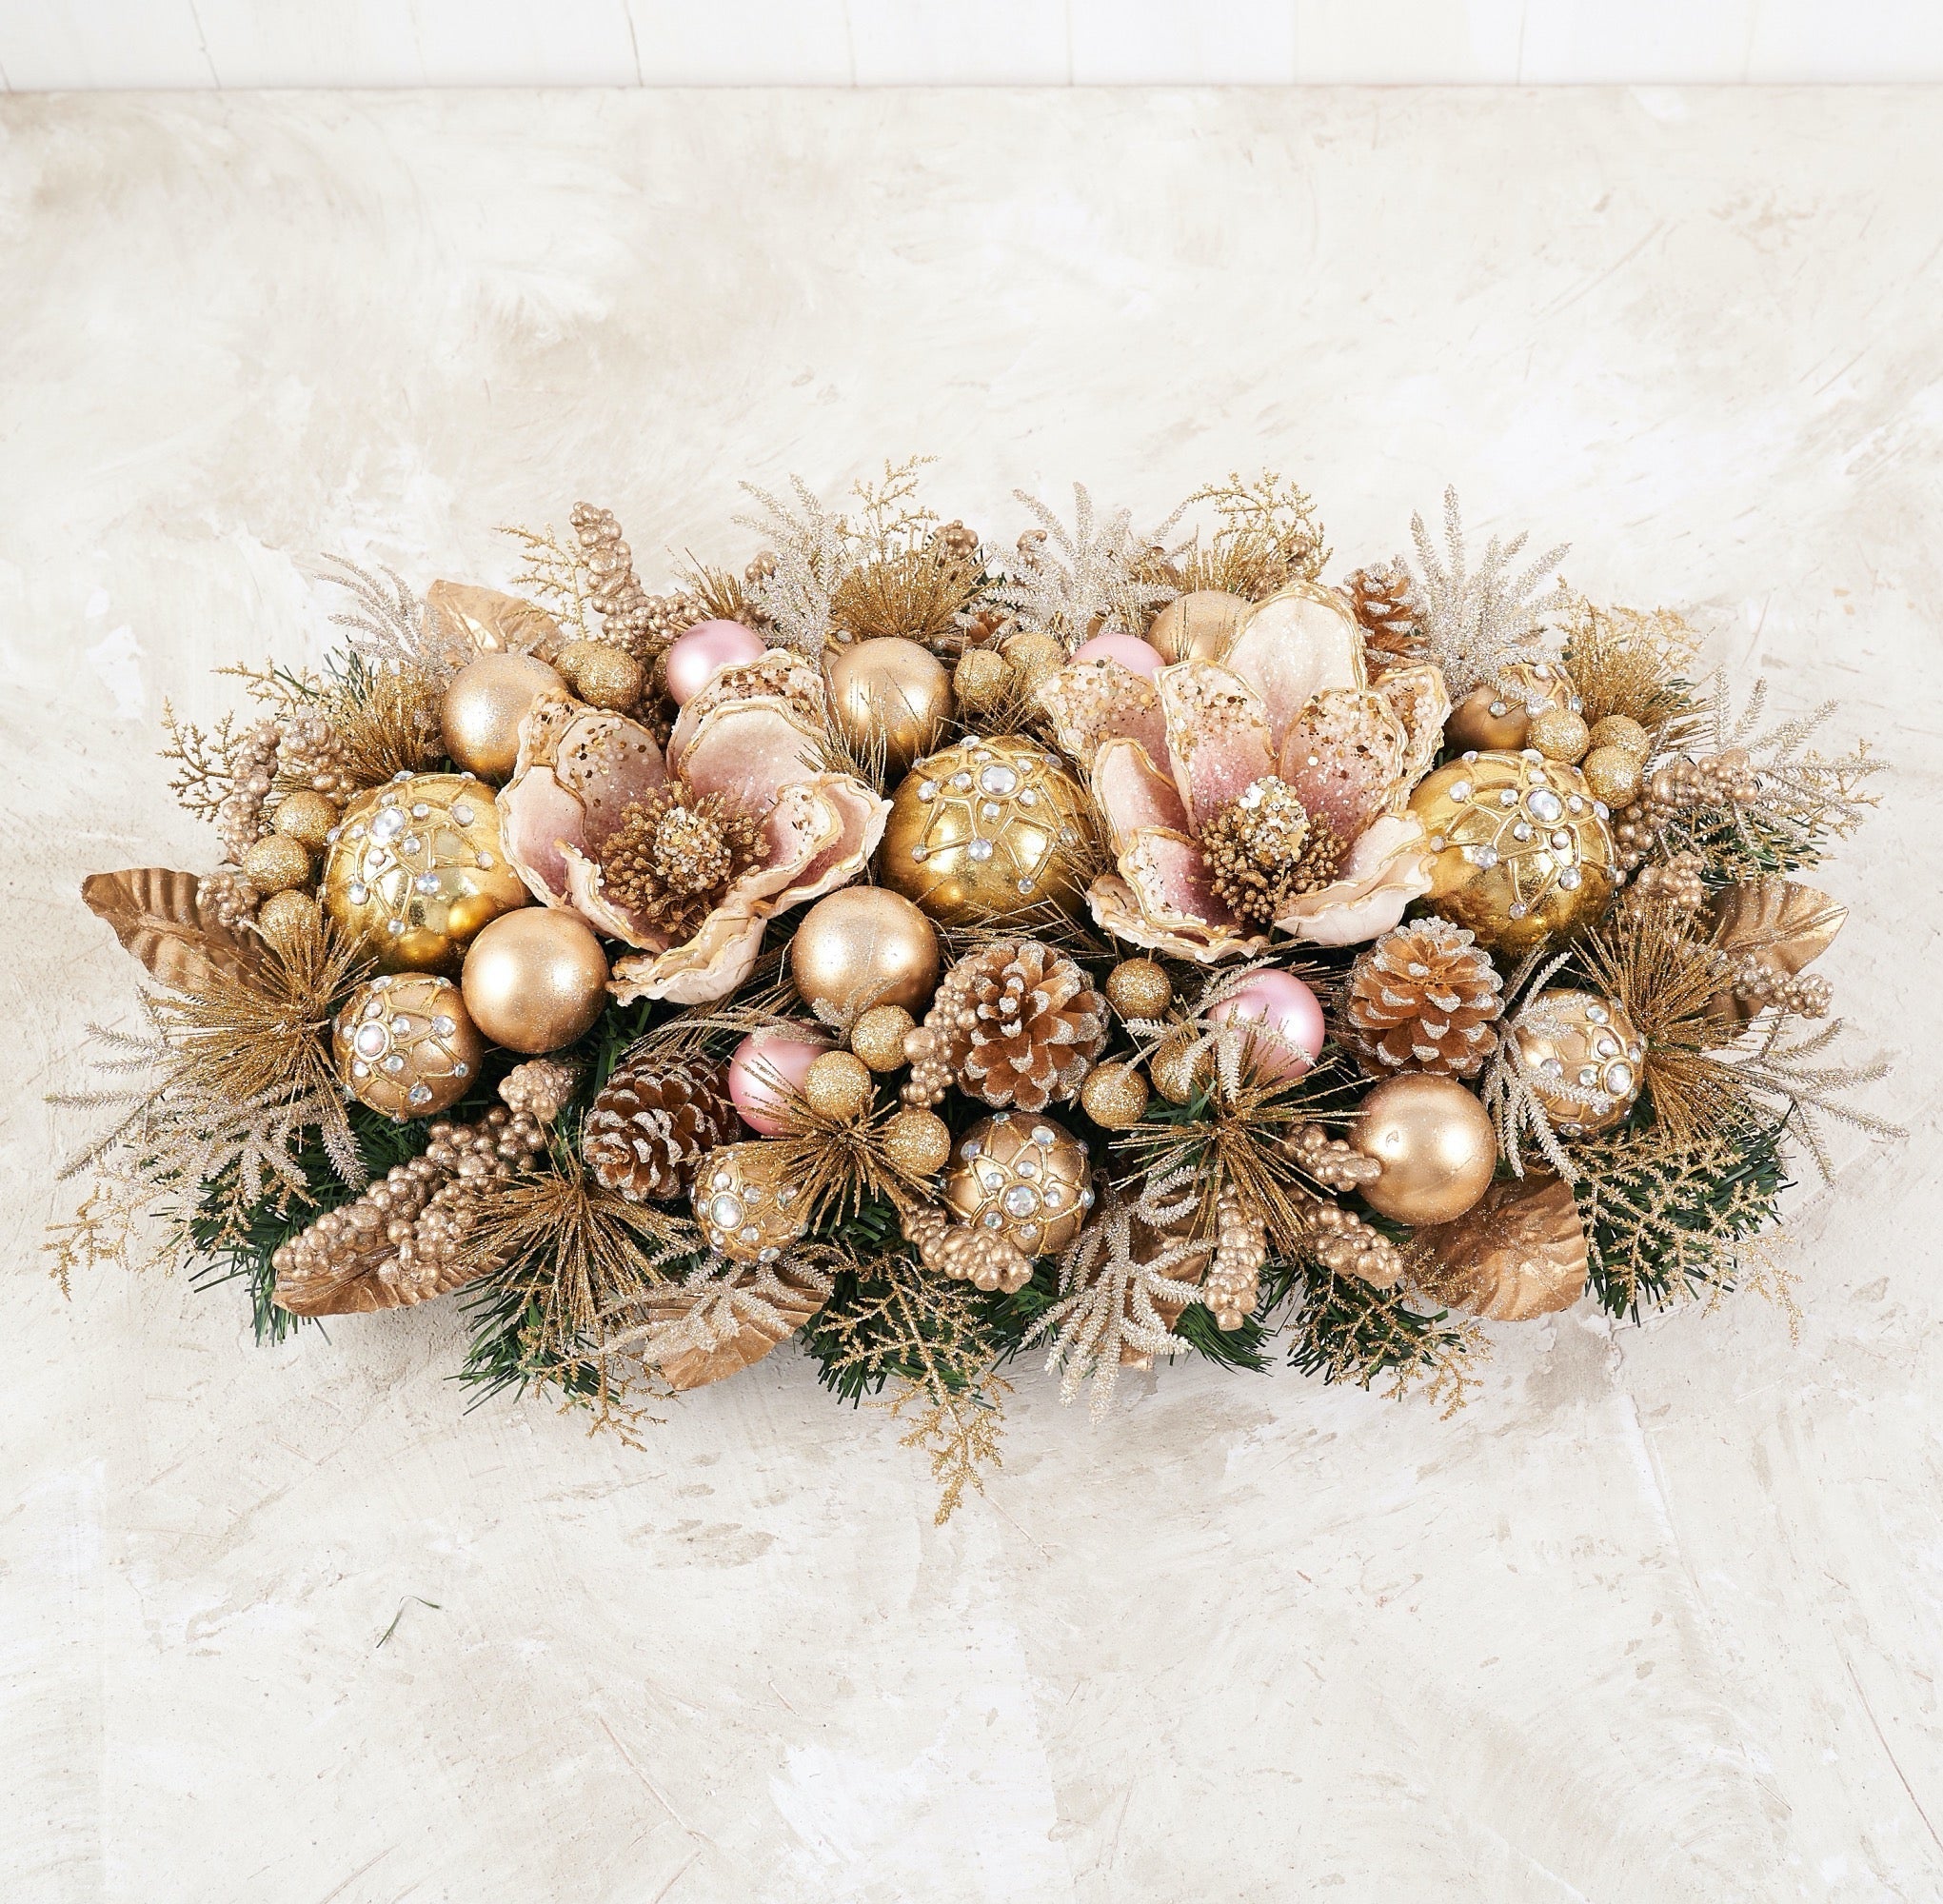 28-inch Glamorous Christmas Magnolia Arrangement - craftmasterslate